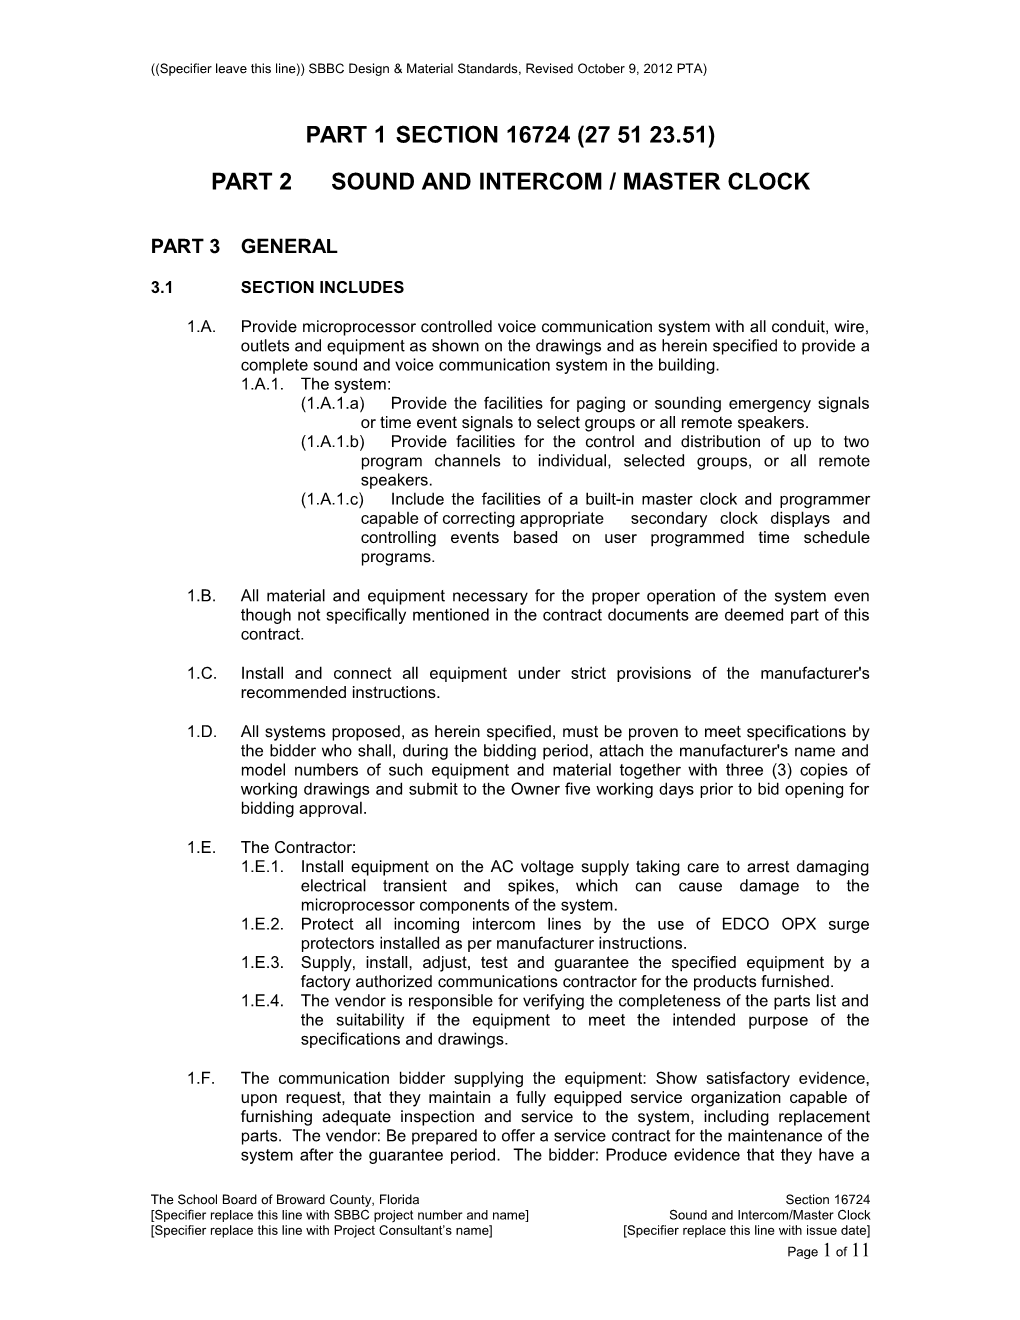 Sound and Intercom / Master Clock